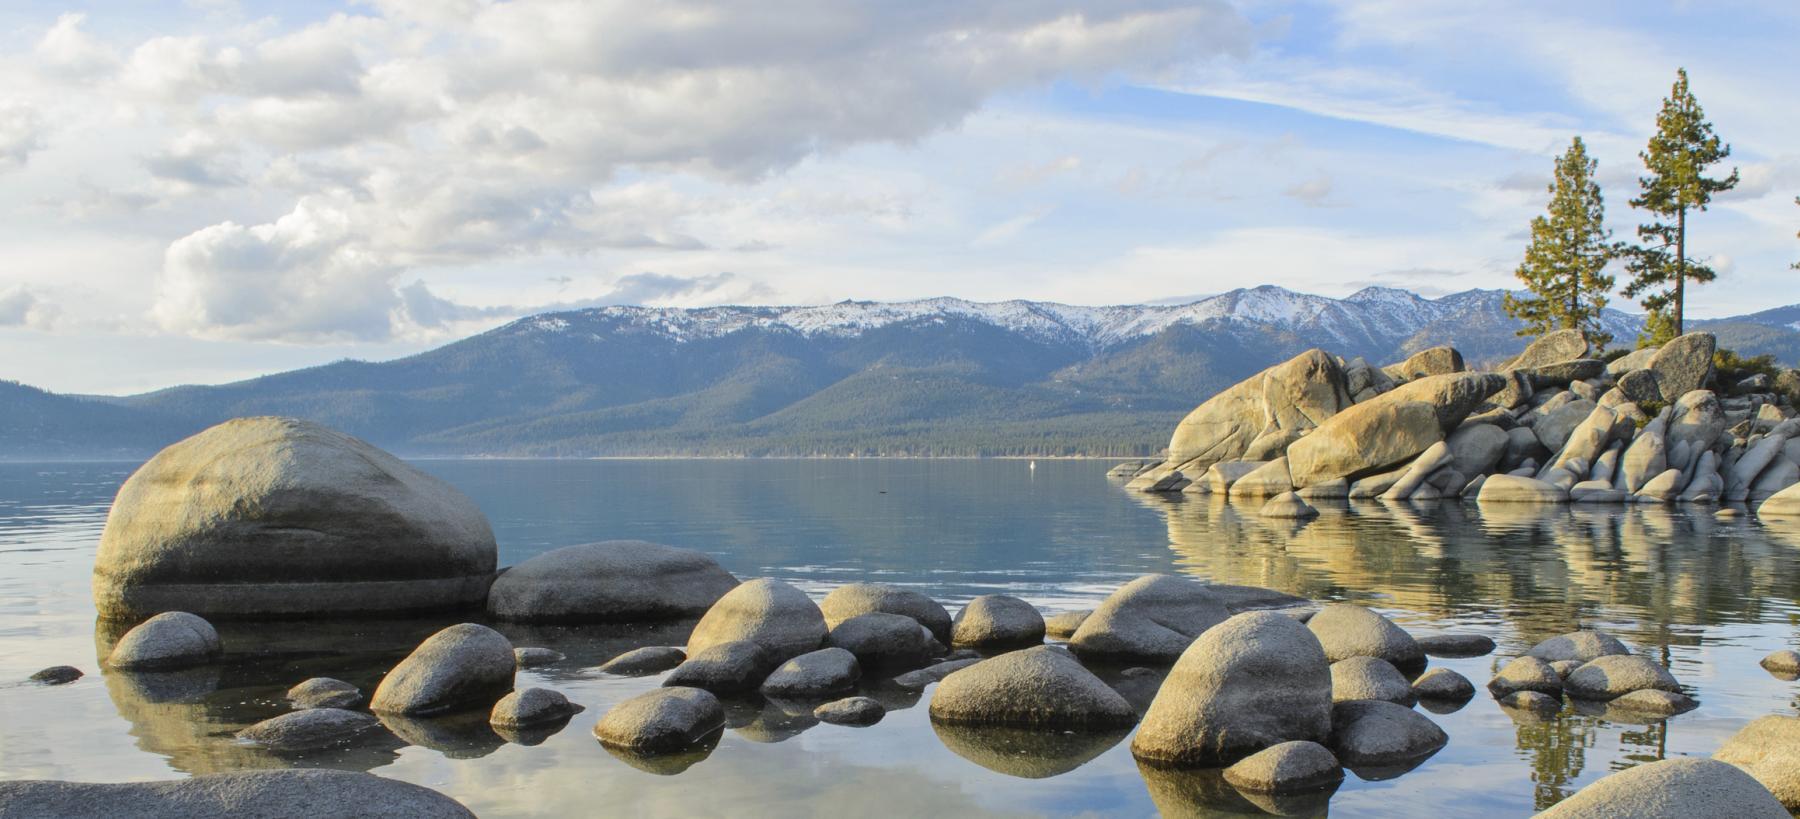 lake tahoe view boulders along shore